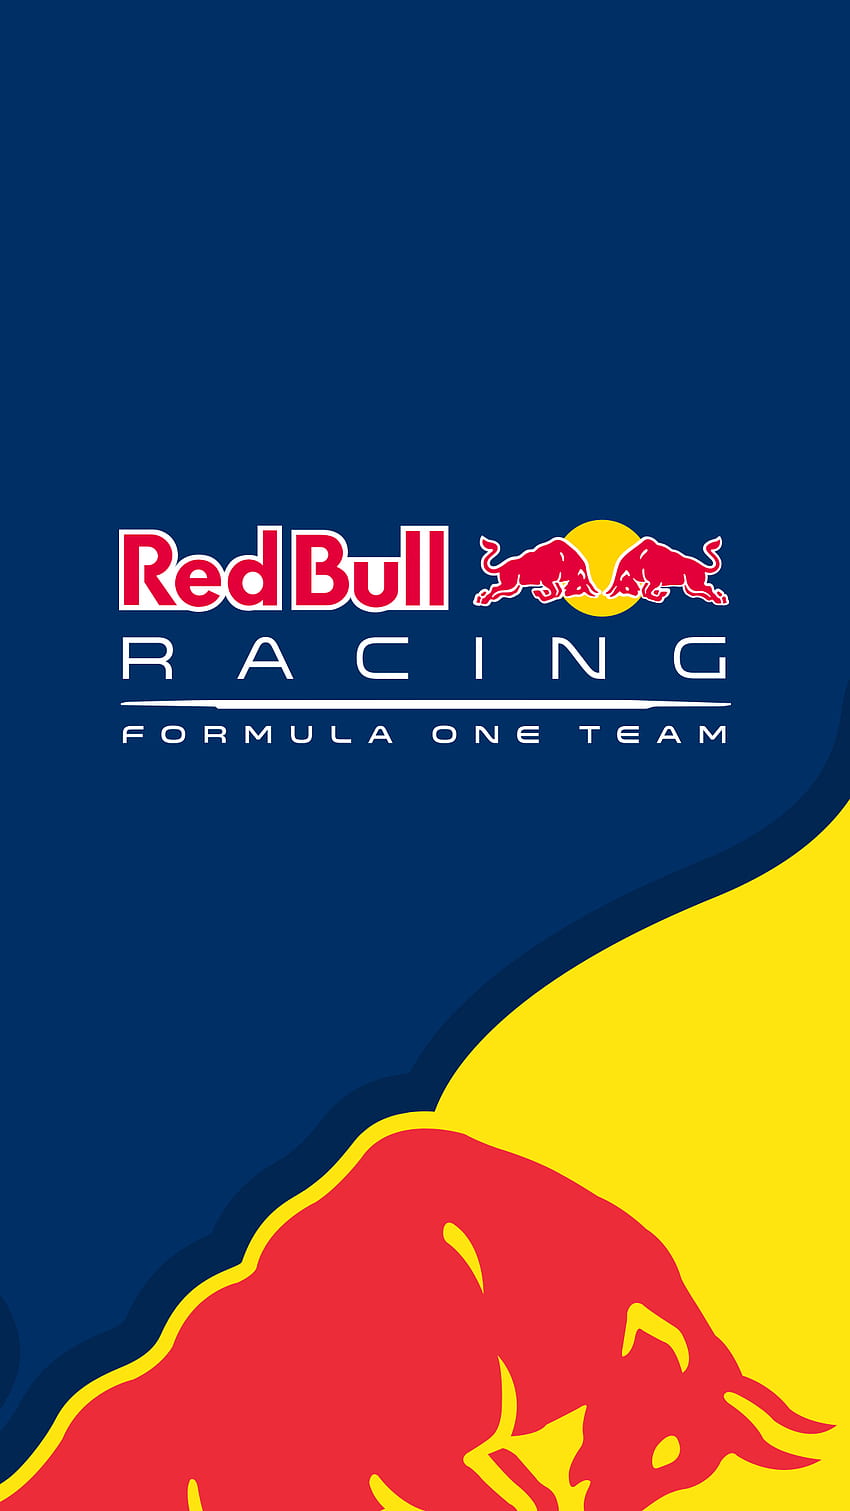 Red Bull finalises Mateschitz succession plan